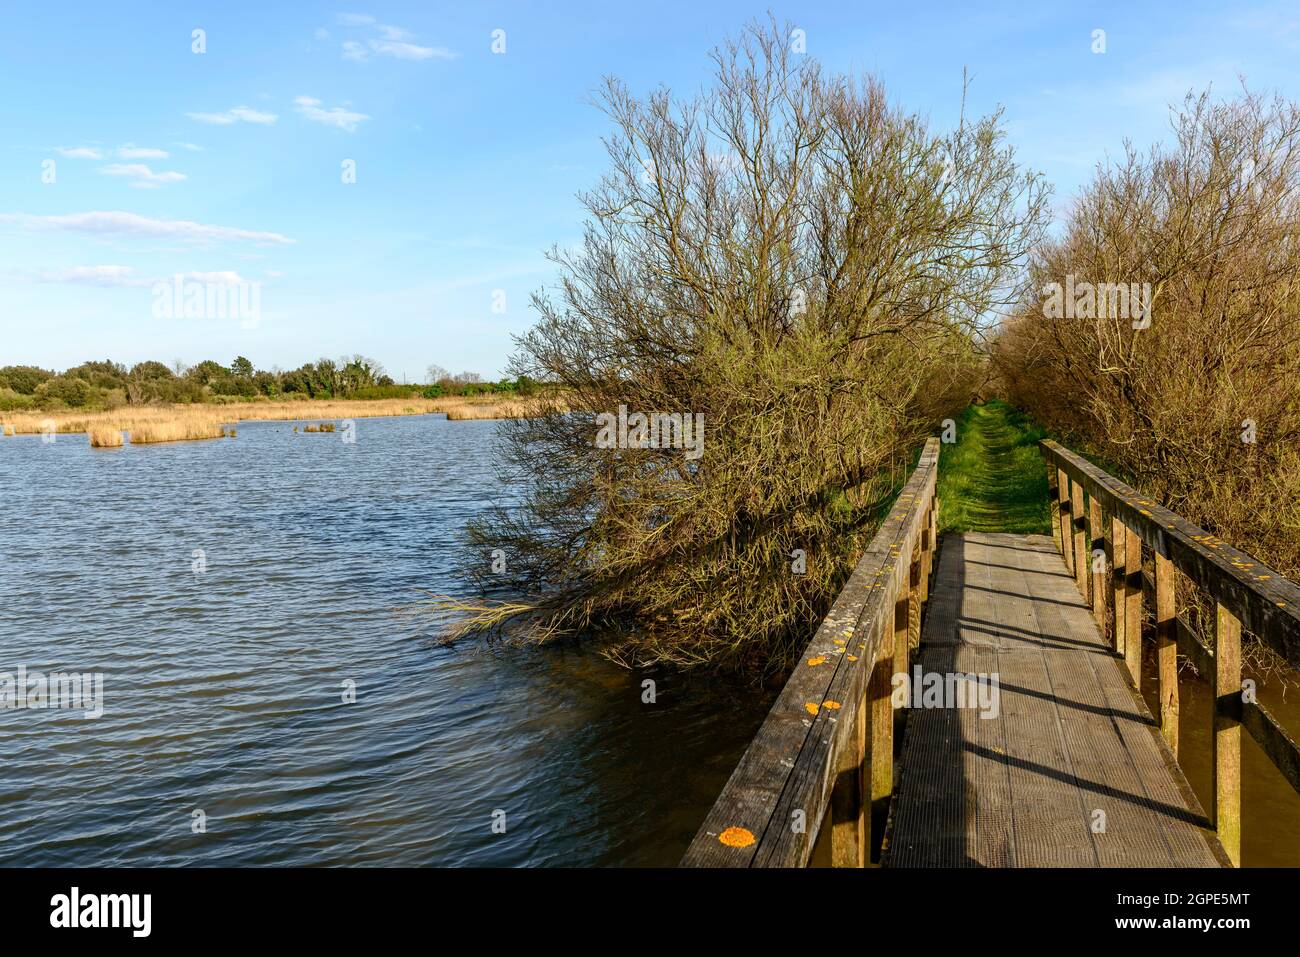 wooden bridge of broadwalk crosses lagoon, shot in bright spring sun light at nature oasis, Cannavie, Volano, Ferrara,  Italy Stock Photo